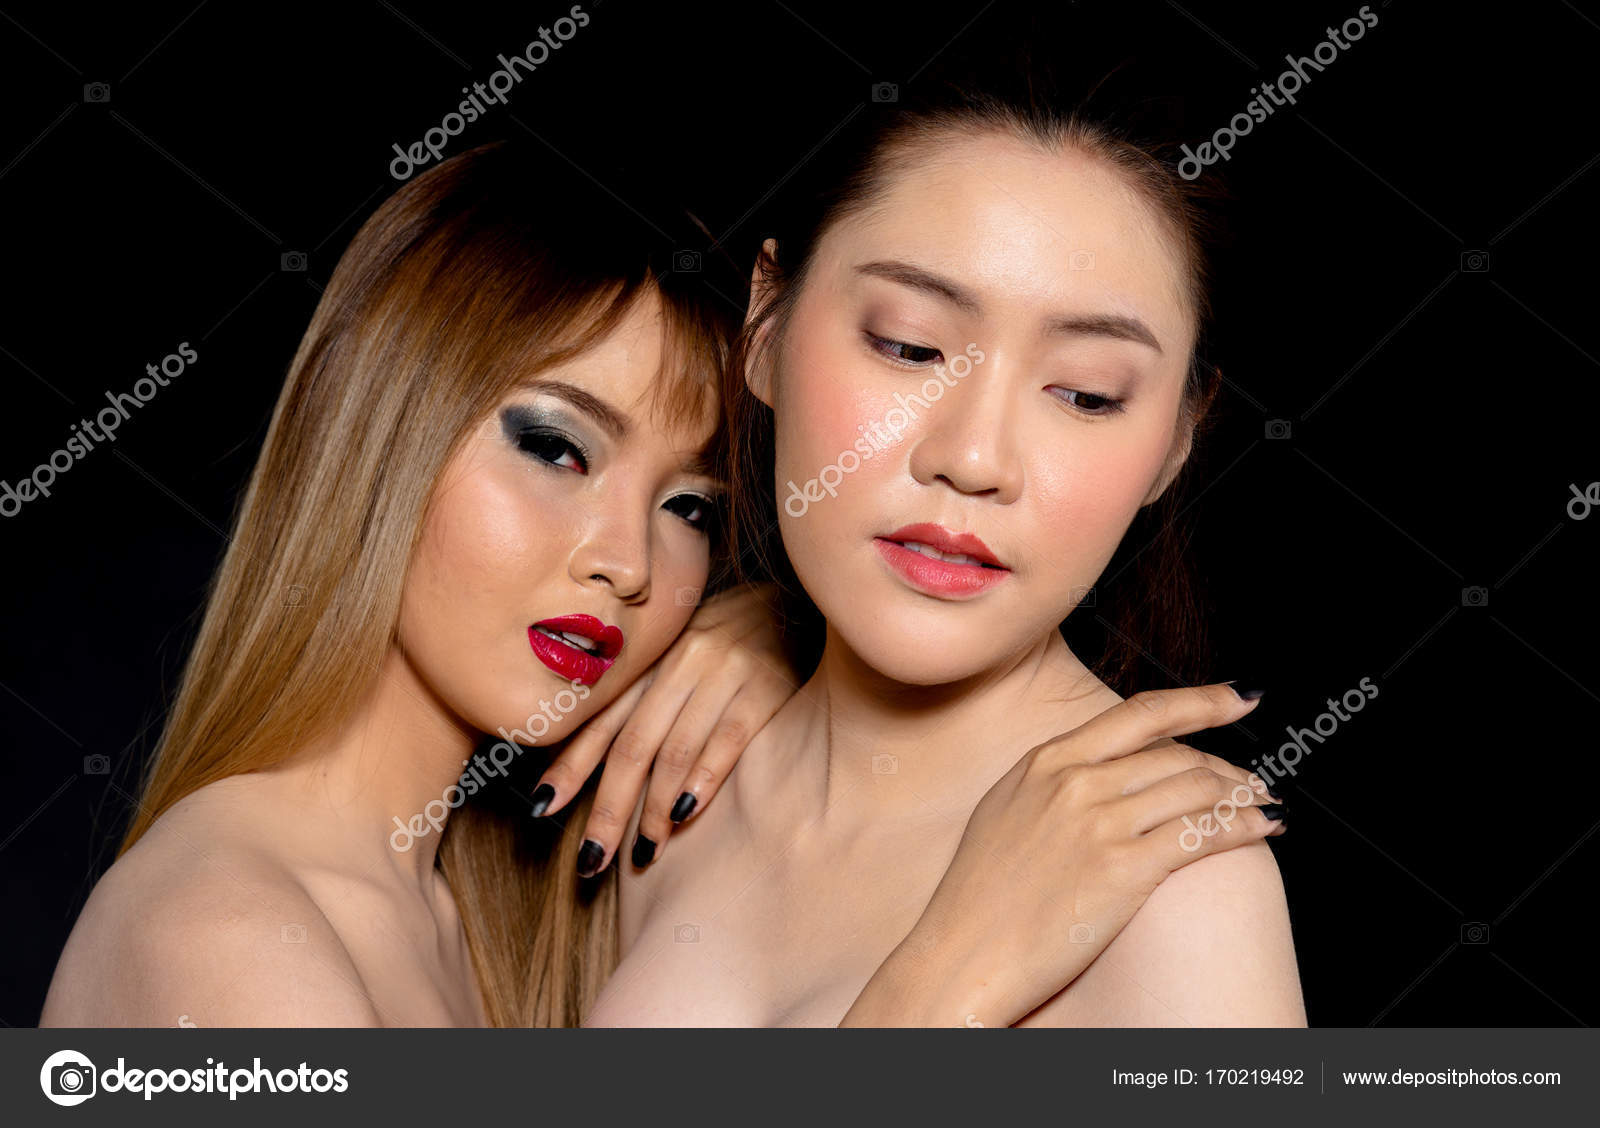 depositphotos 170219492 stock photo asian lesbian couple isolated on_